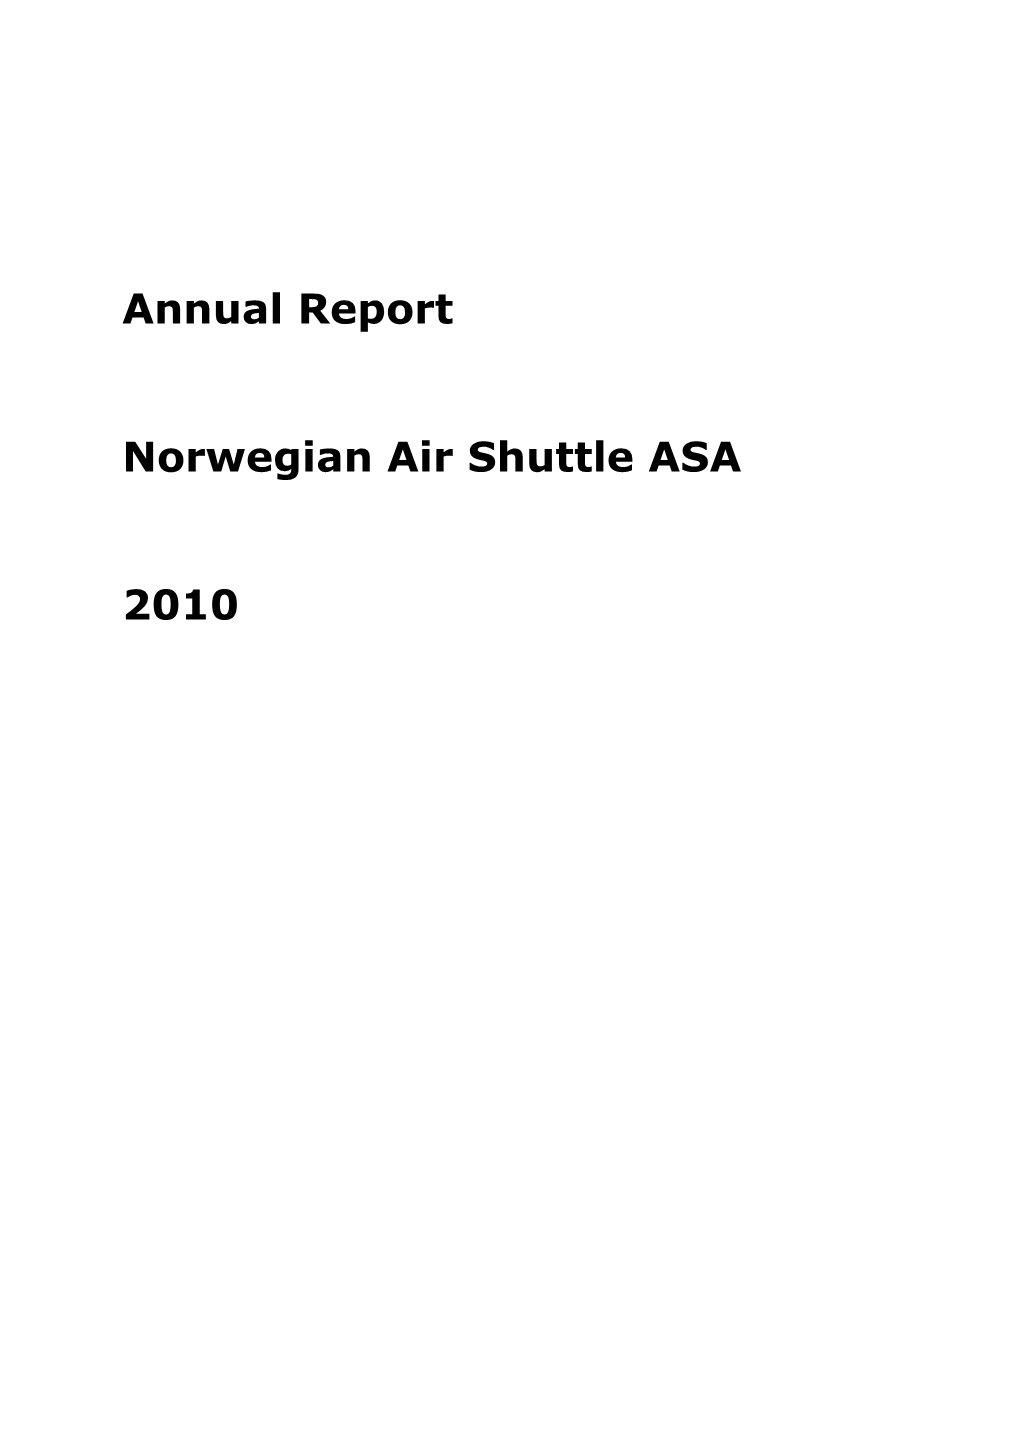 Annual Report Norwegian Air Shuttle ASA 2010